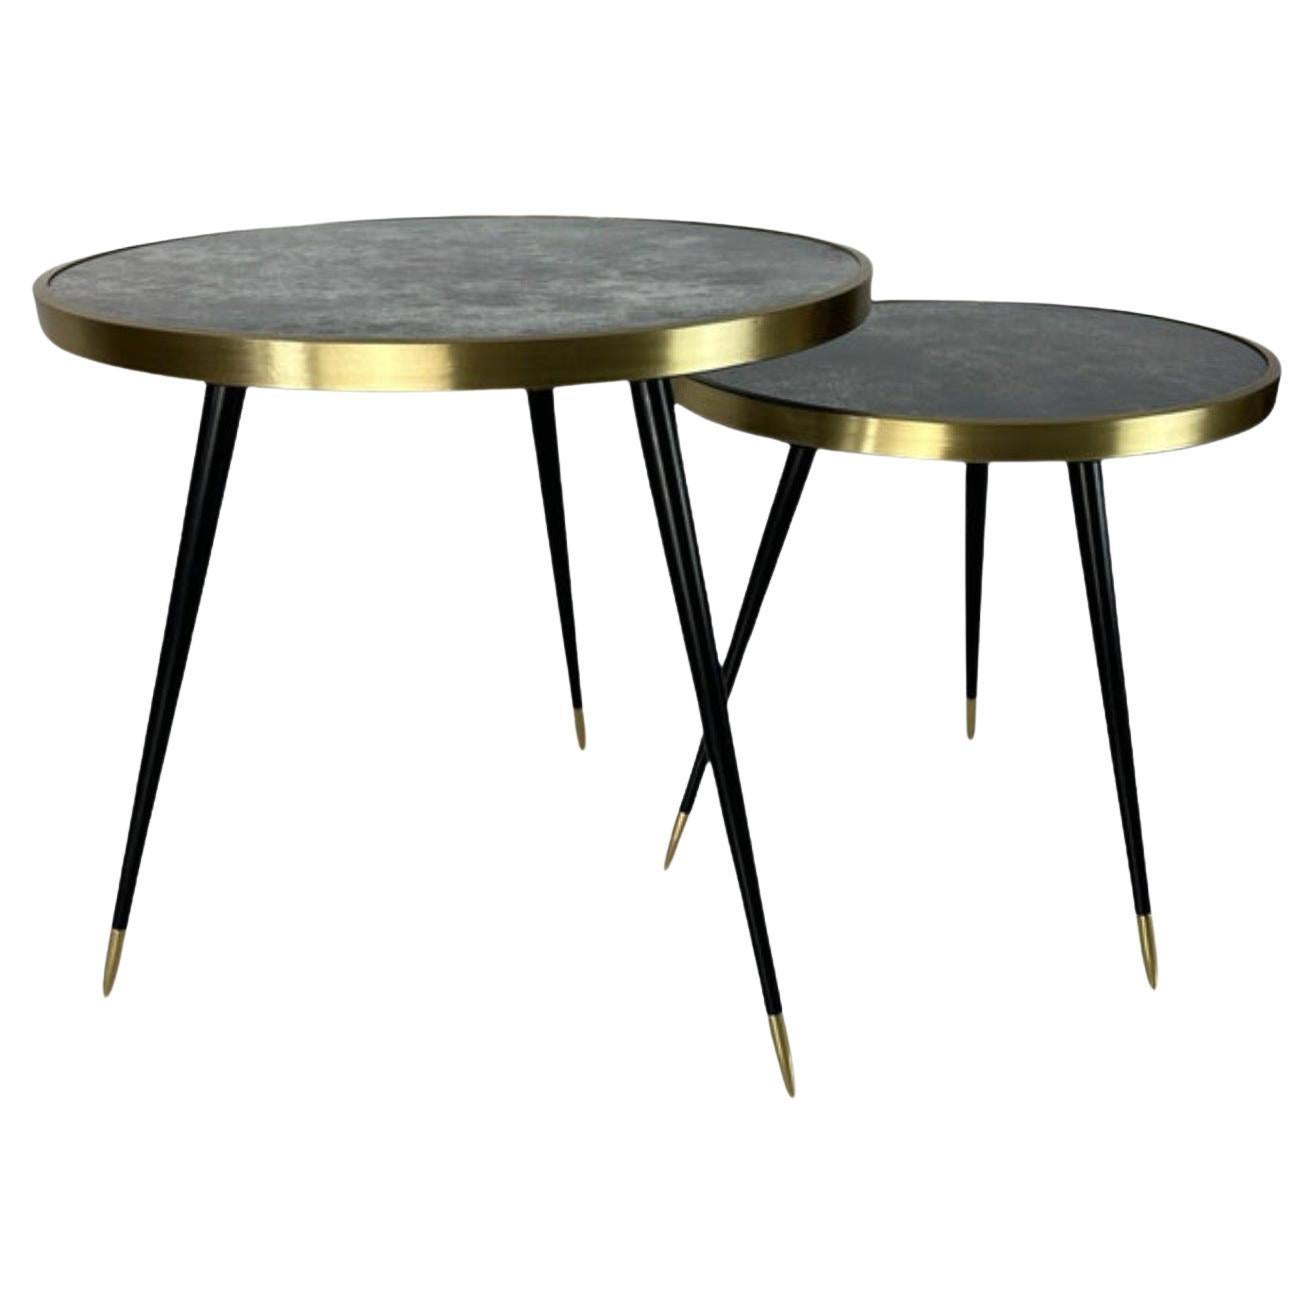 Round Twist Table, Aged Mirror Top & Brass Details, Handcrafted, Size M